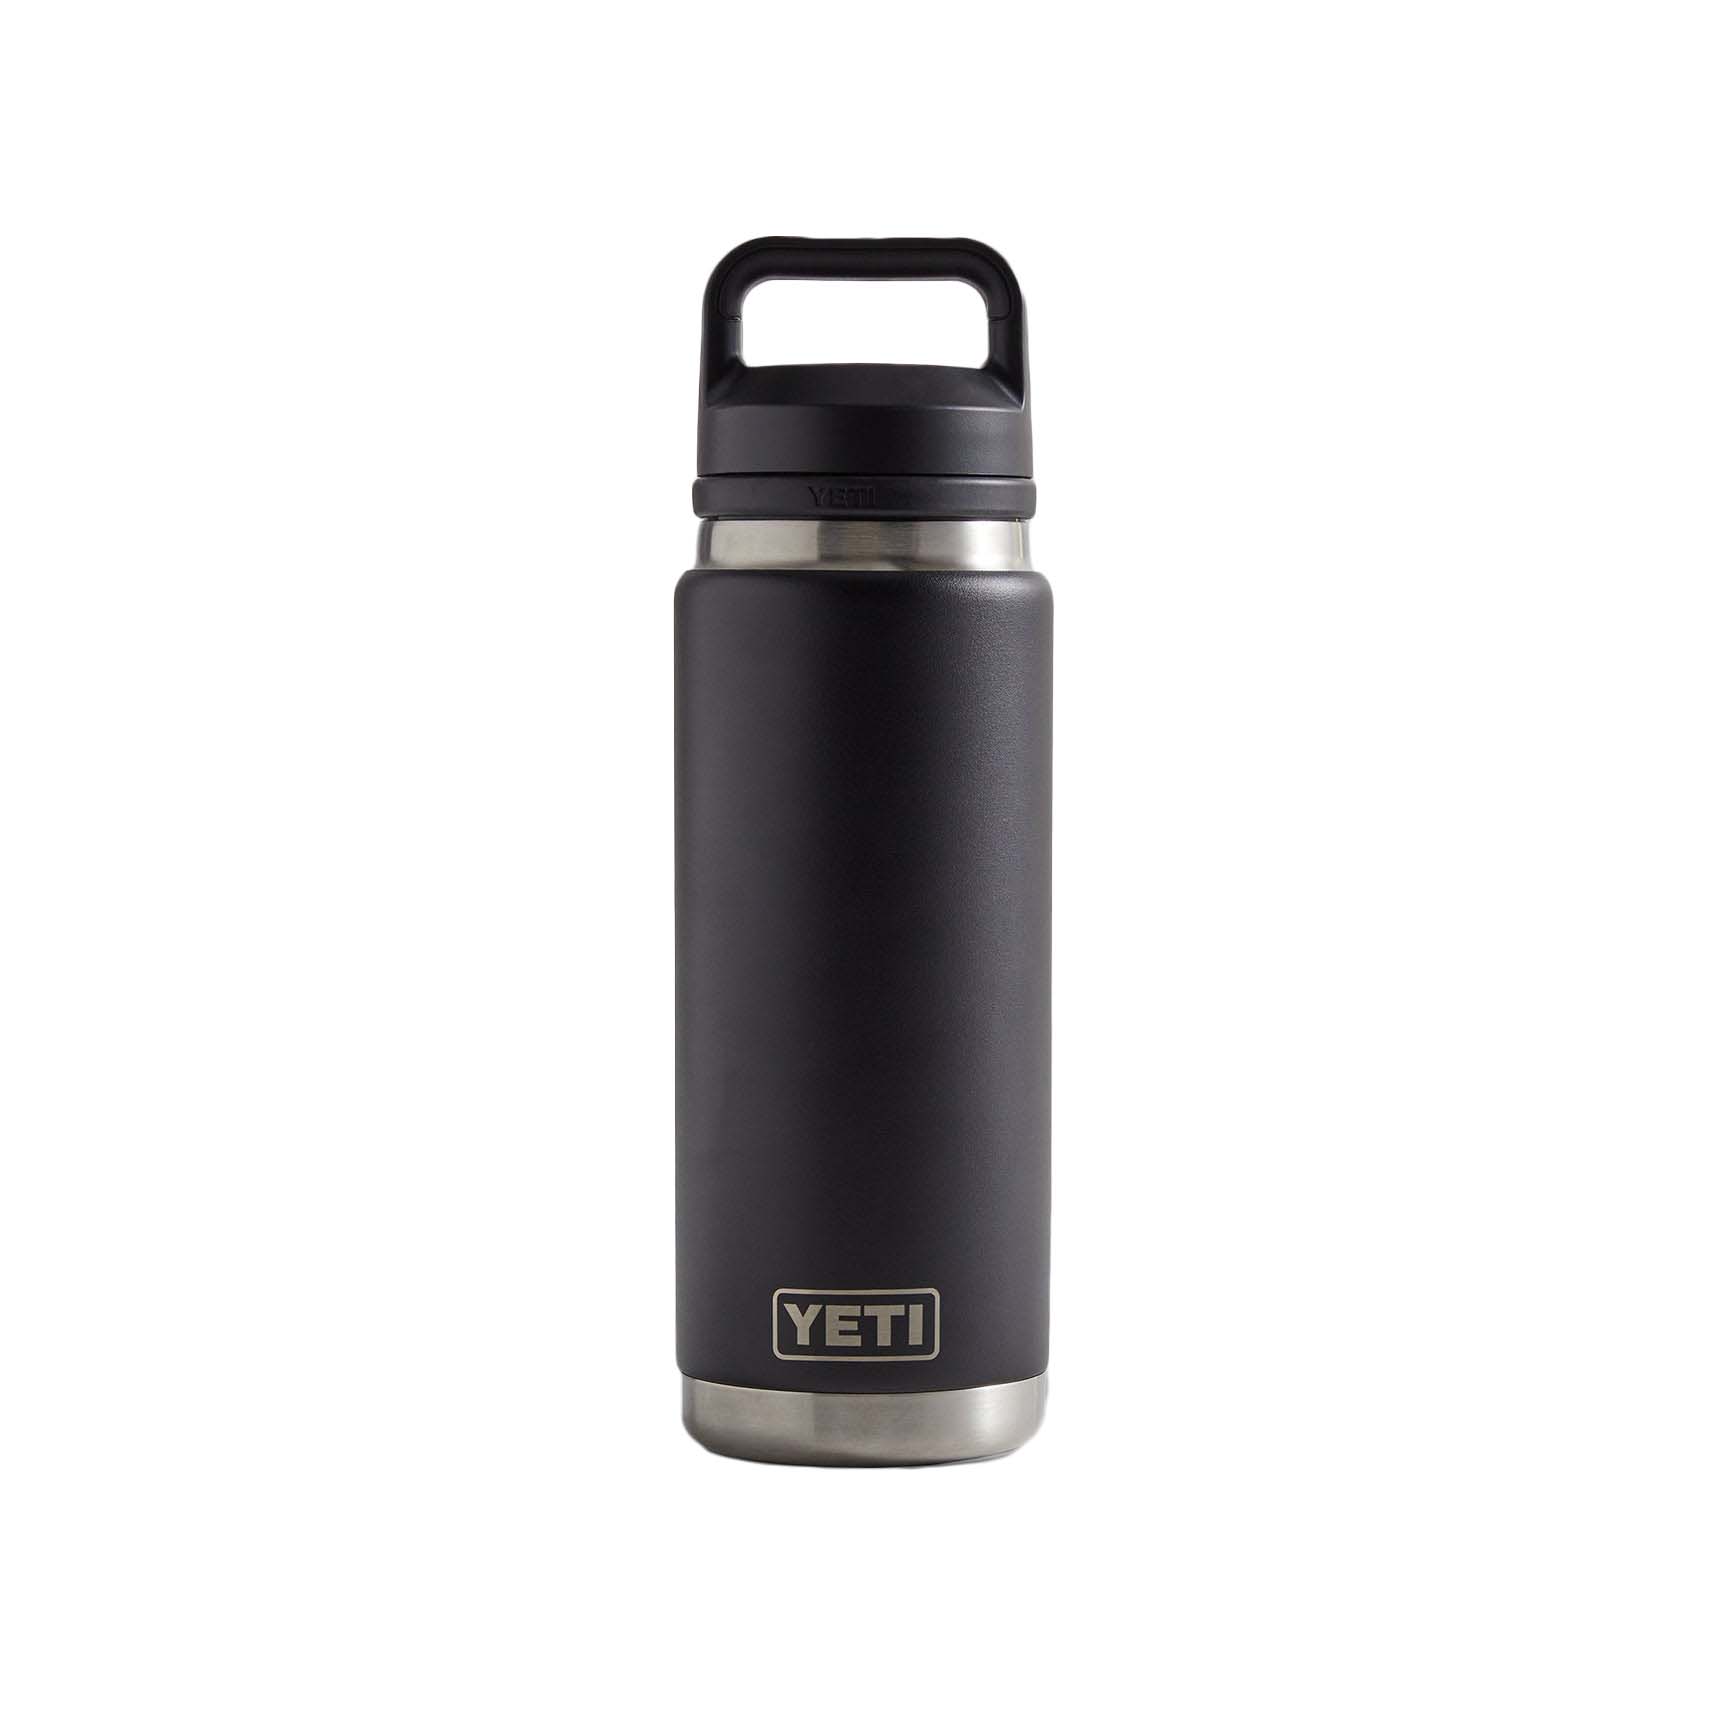 Kith for Yeti Rambler Tumbler Bottle Black